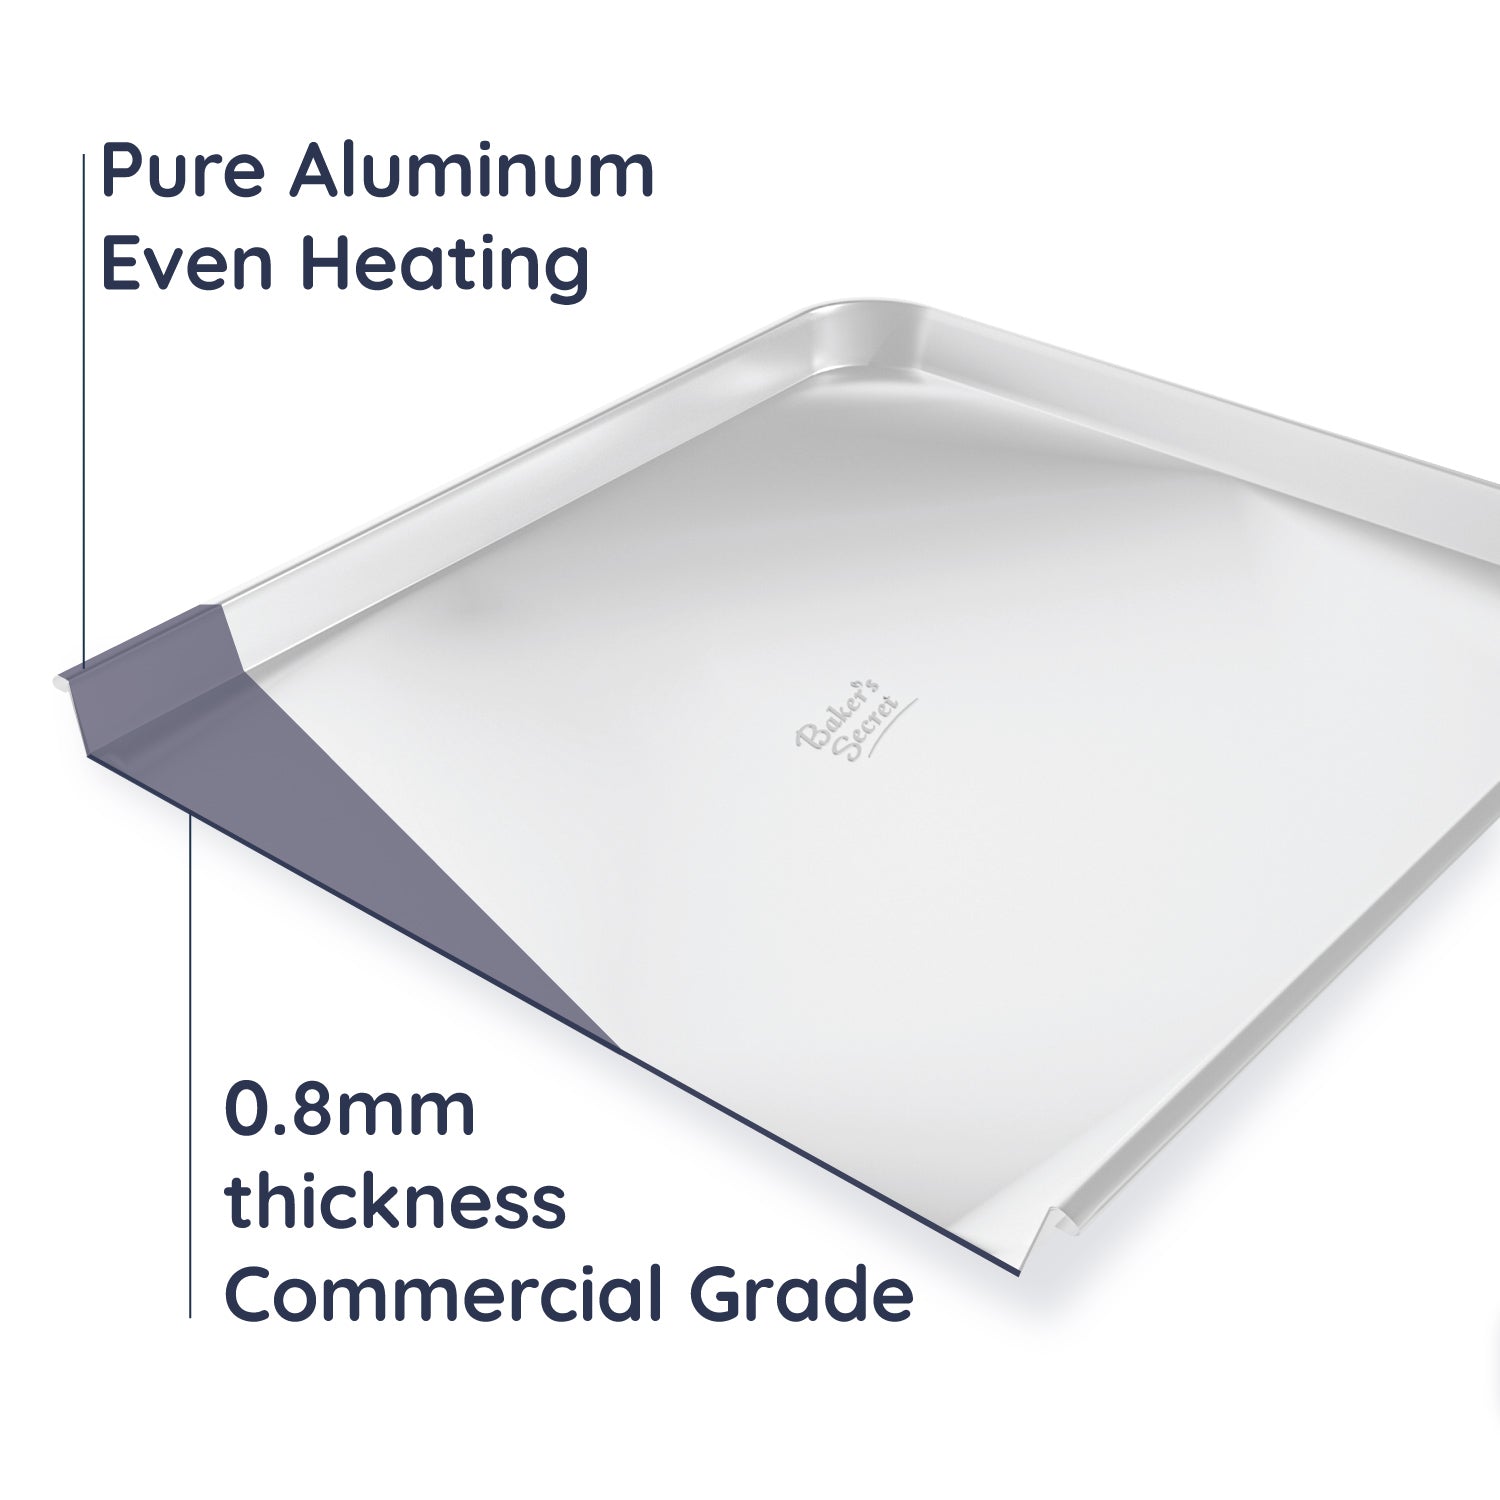 Commercial Grade Pure Aluminum Cookie Sheet - 14.5" x 10"   - Baker's Secret